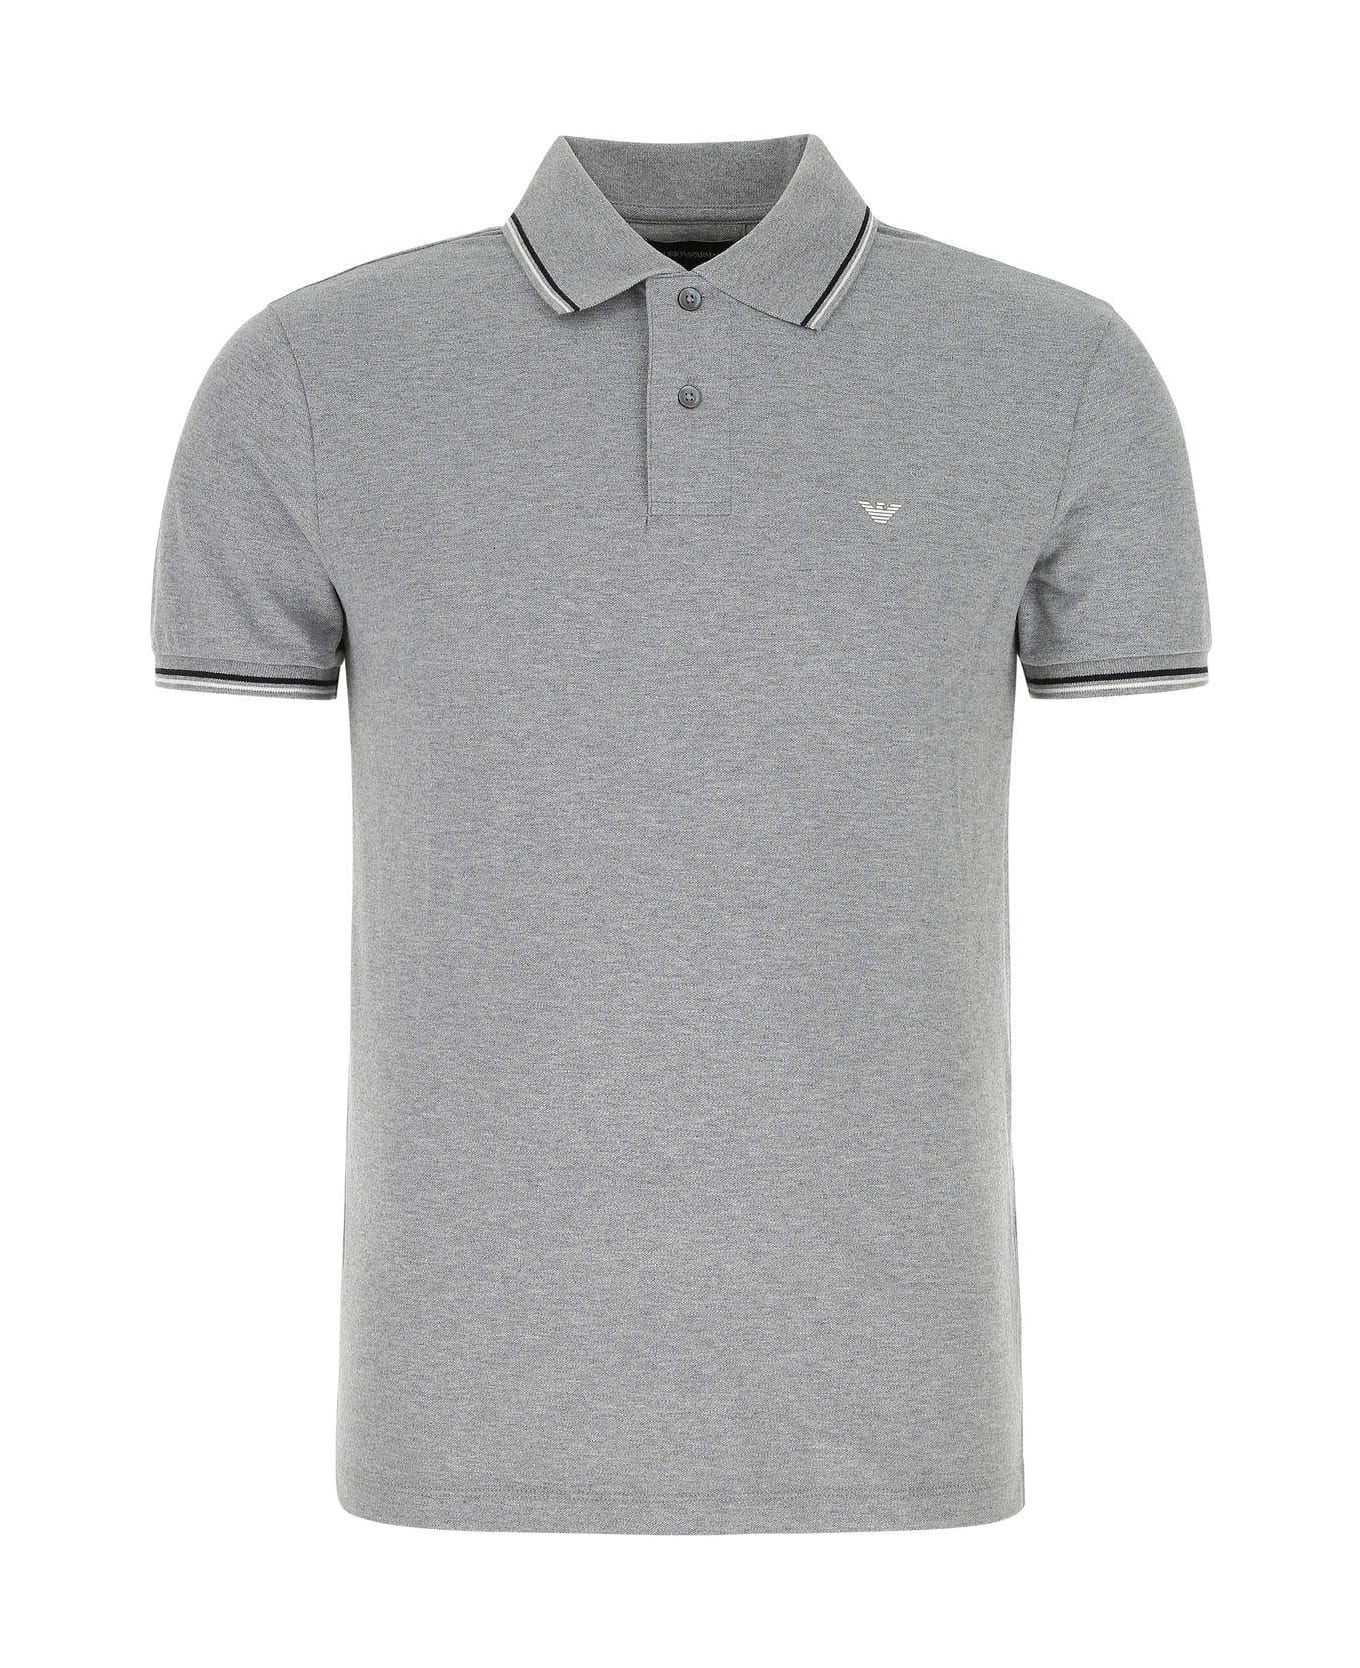 Emporio Armani Grey Stretch Cotton Polo Shirt - GREY